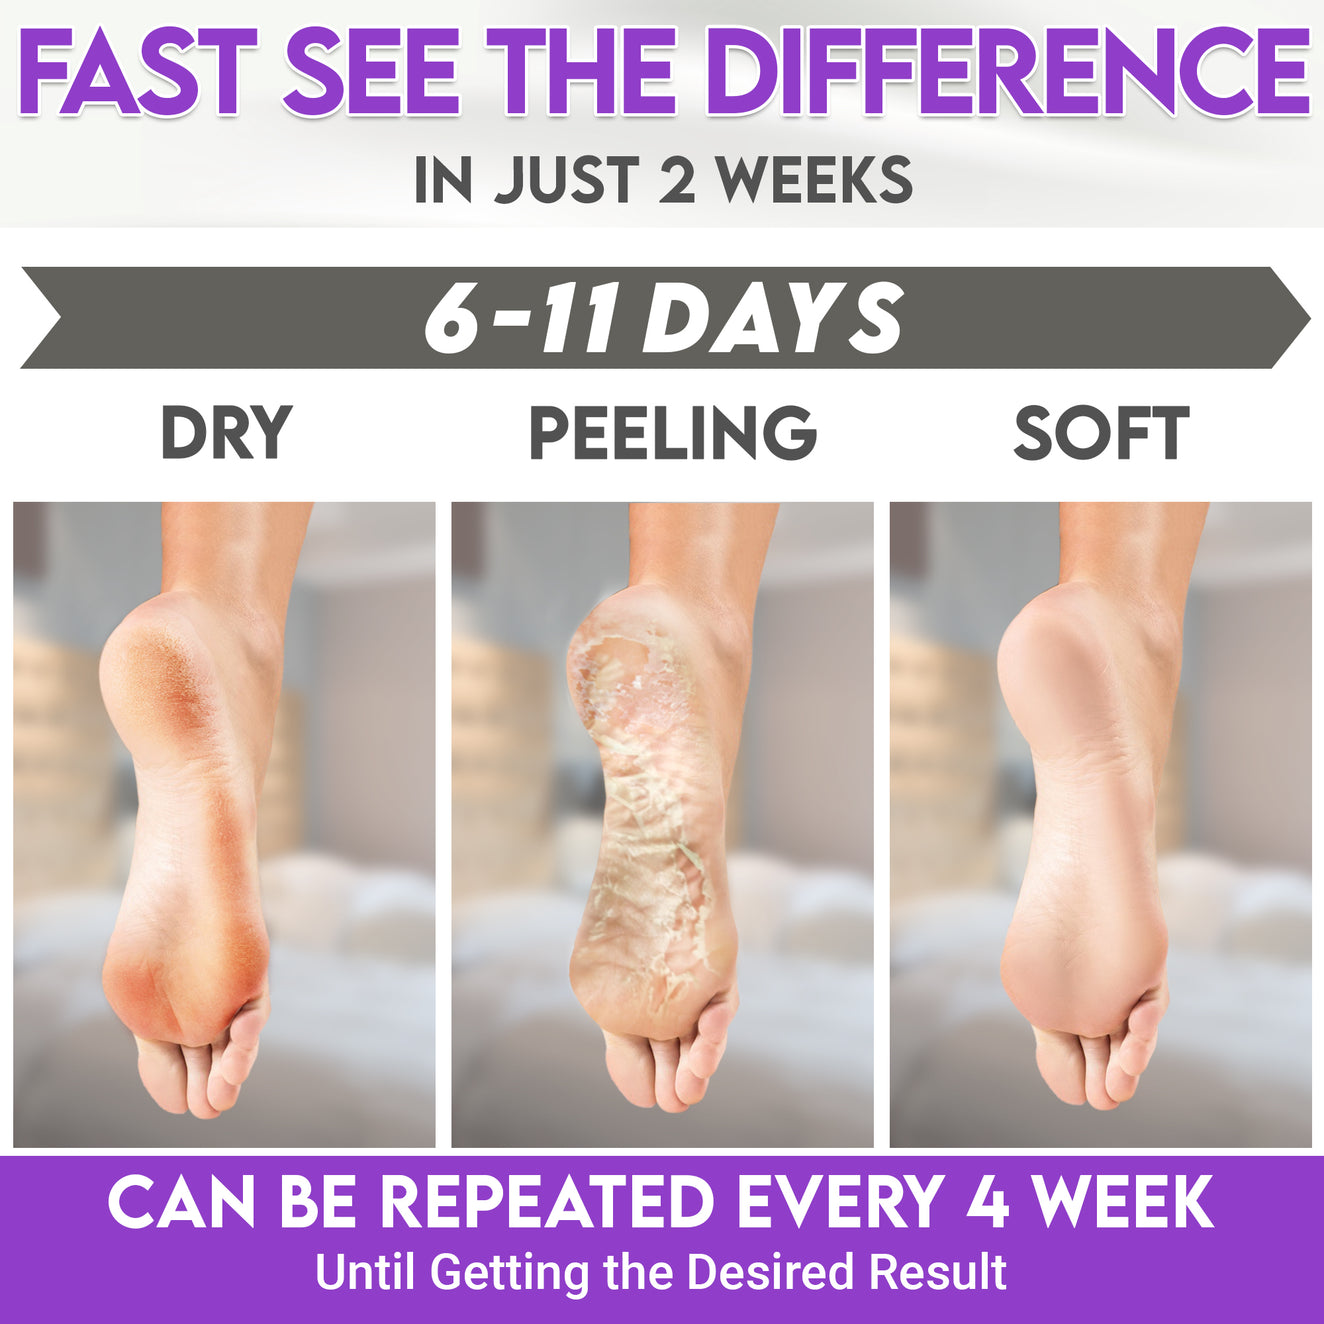 Karma lavender Foot Peel Mask – Helps Remove Callus & Repair Cracked Heels by Karma Organic – For Men & Women [2 Pack]